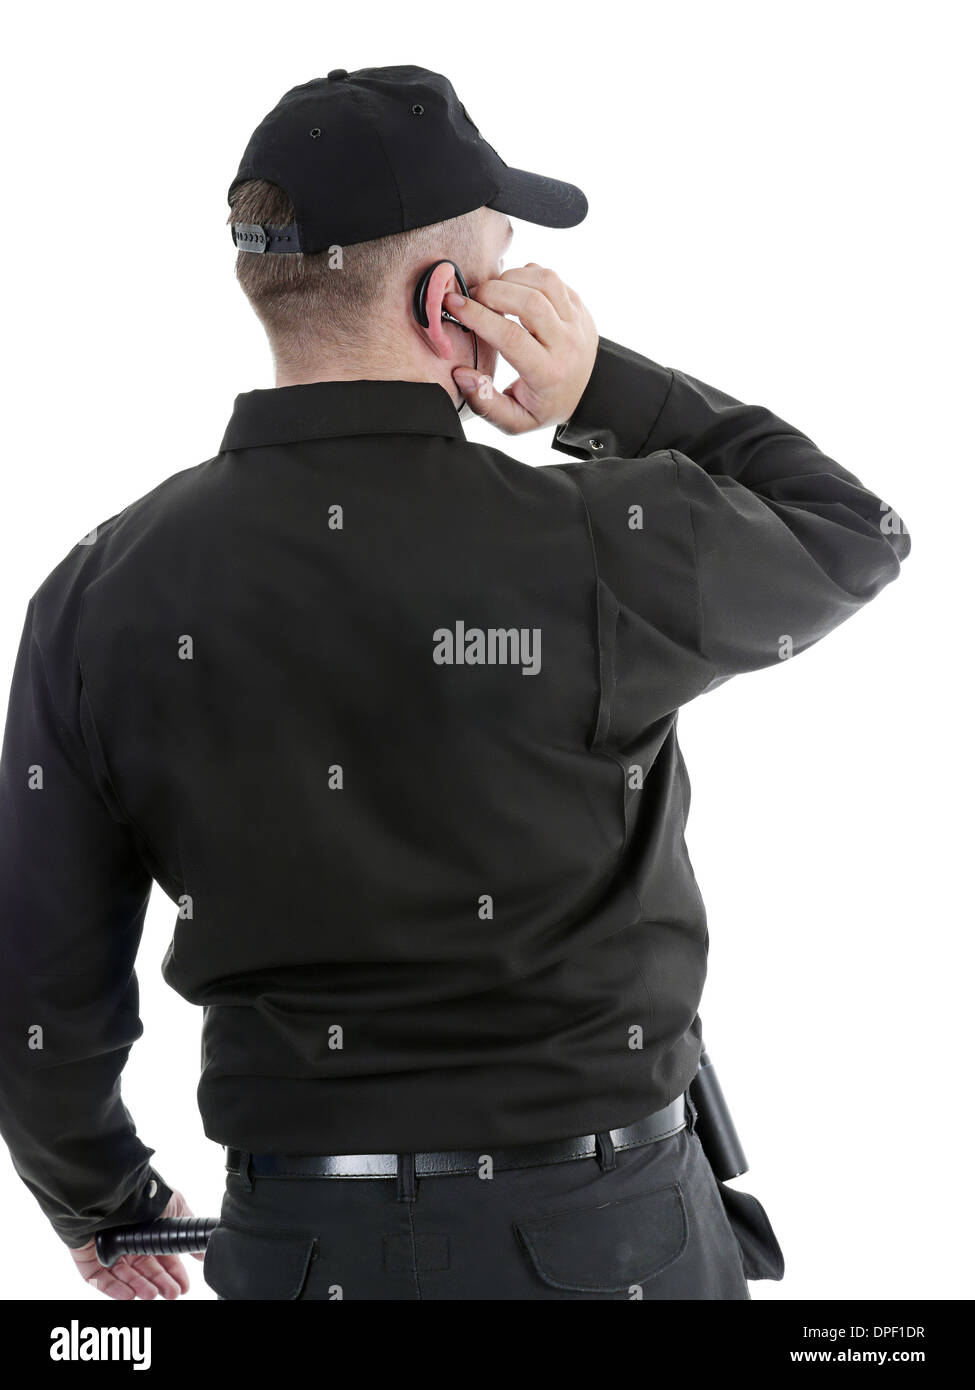 Security man wearing black uniform communicating using headset Stock Photo